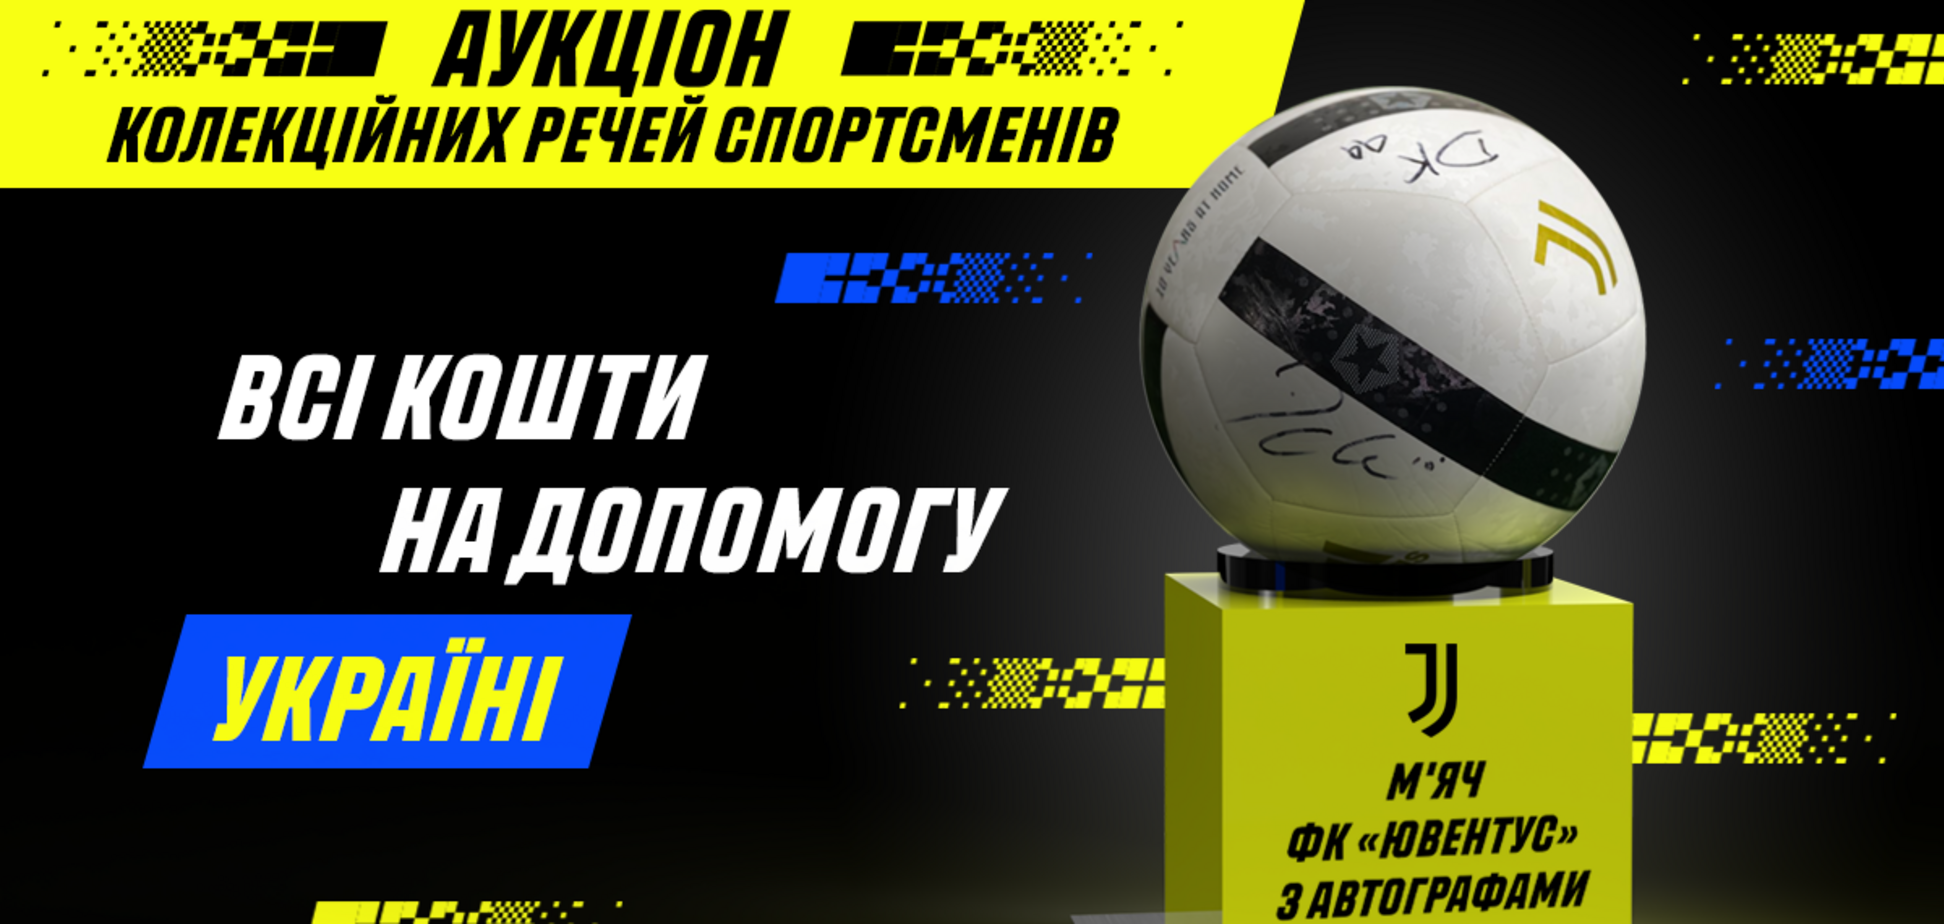 FC Juventus та Parimatch Ukraine продовжують допомагати українцям